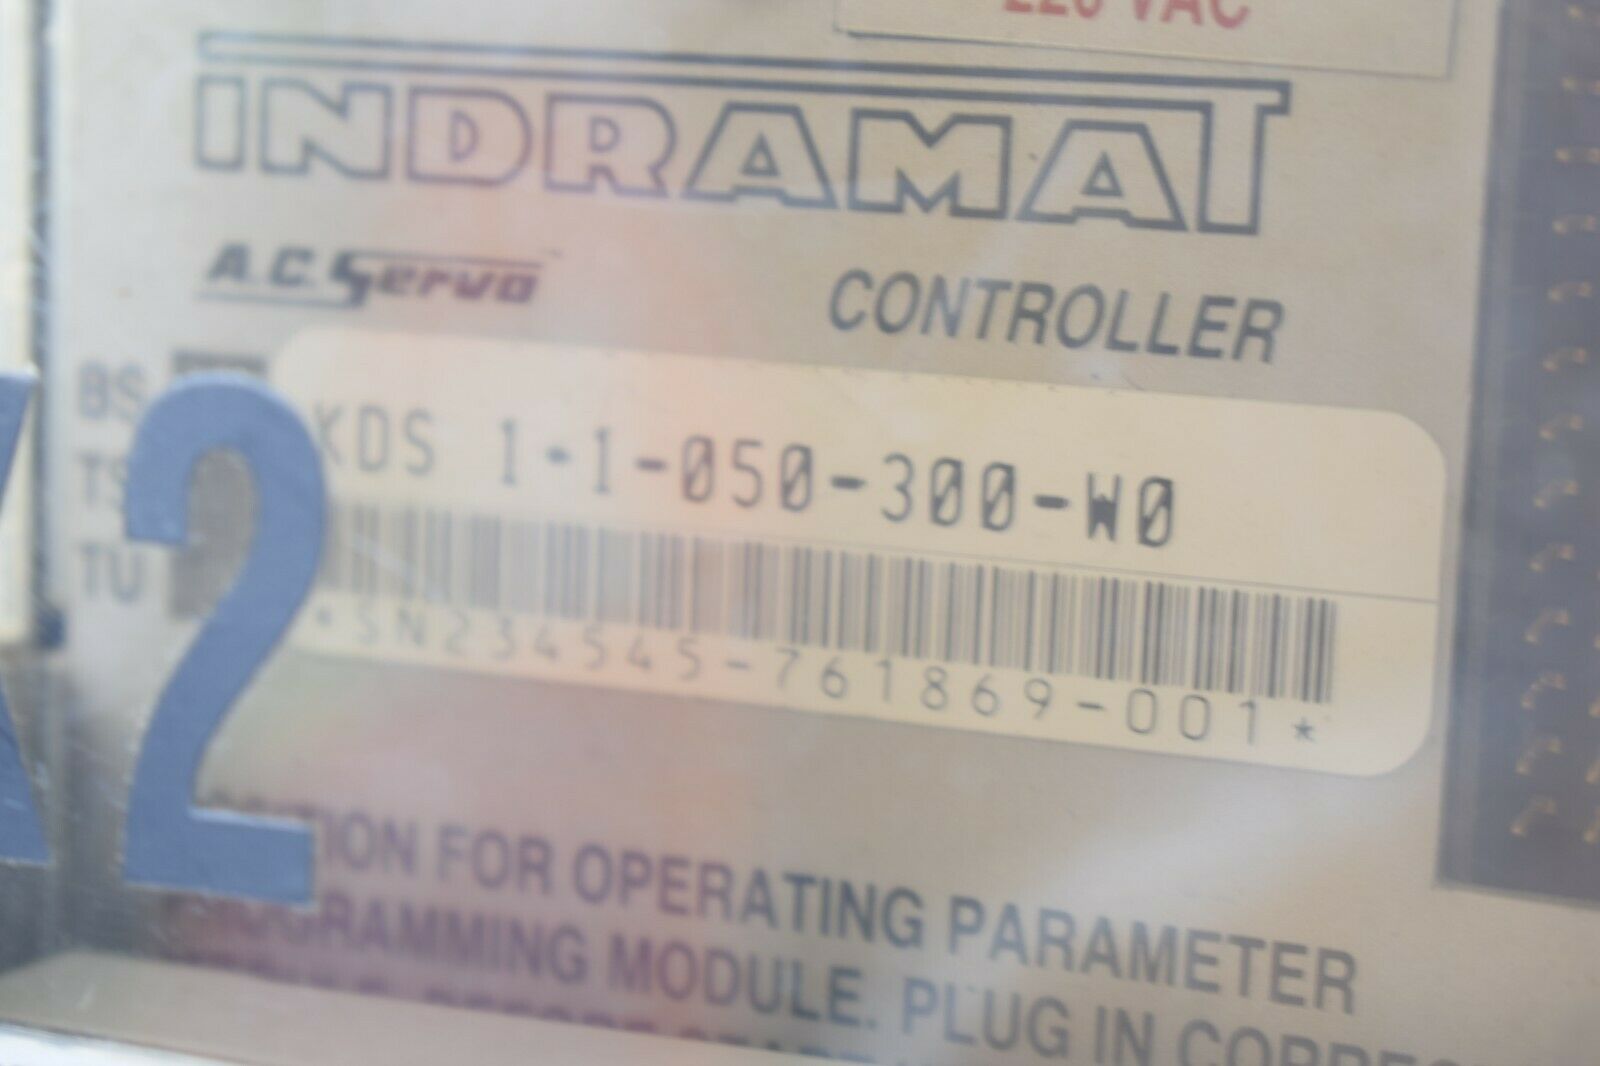 Indramat A.C.Servo Controller KDS 1.1-050-300-W0 inkl. MOD3/1X108-006